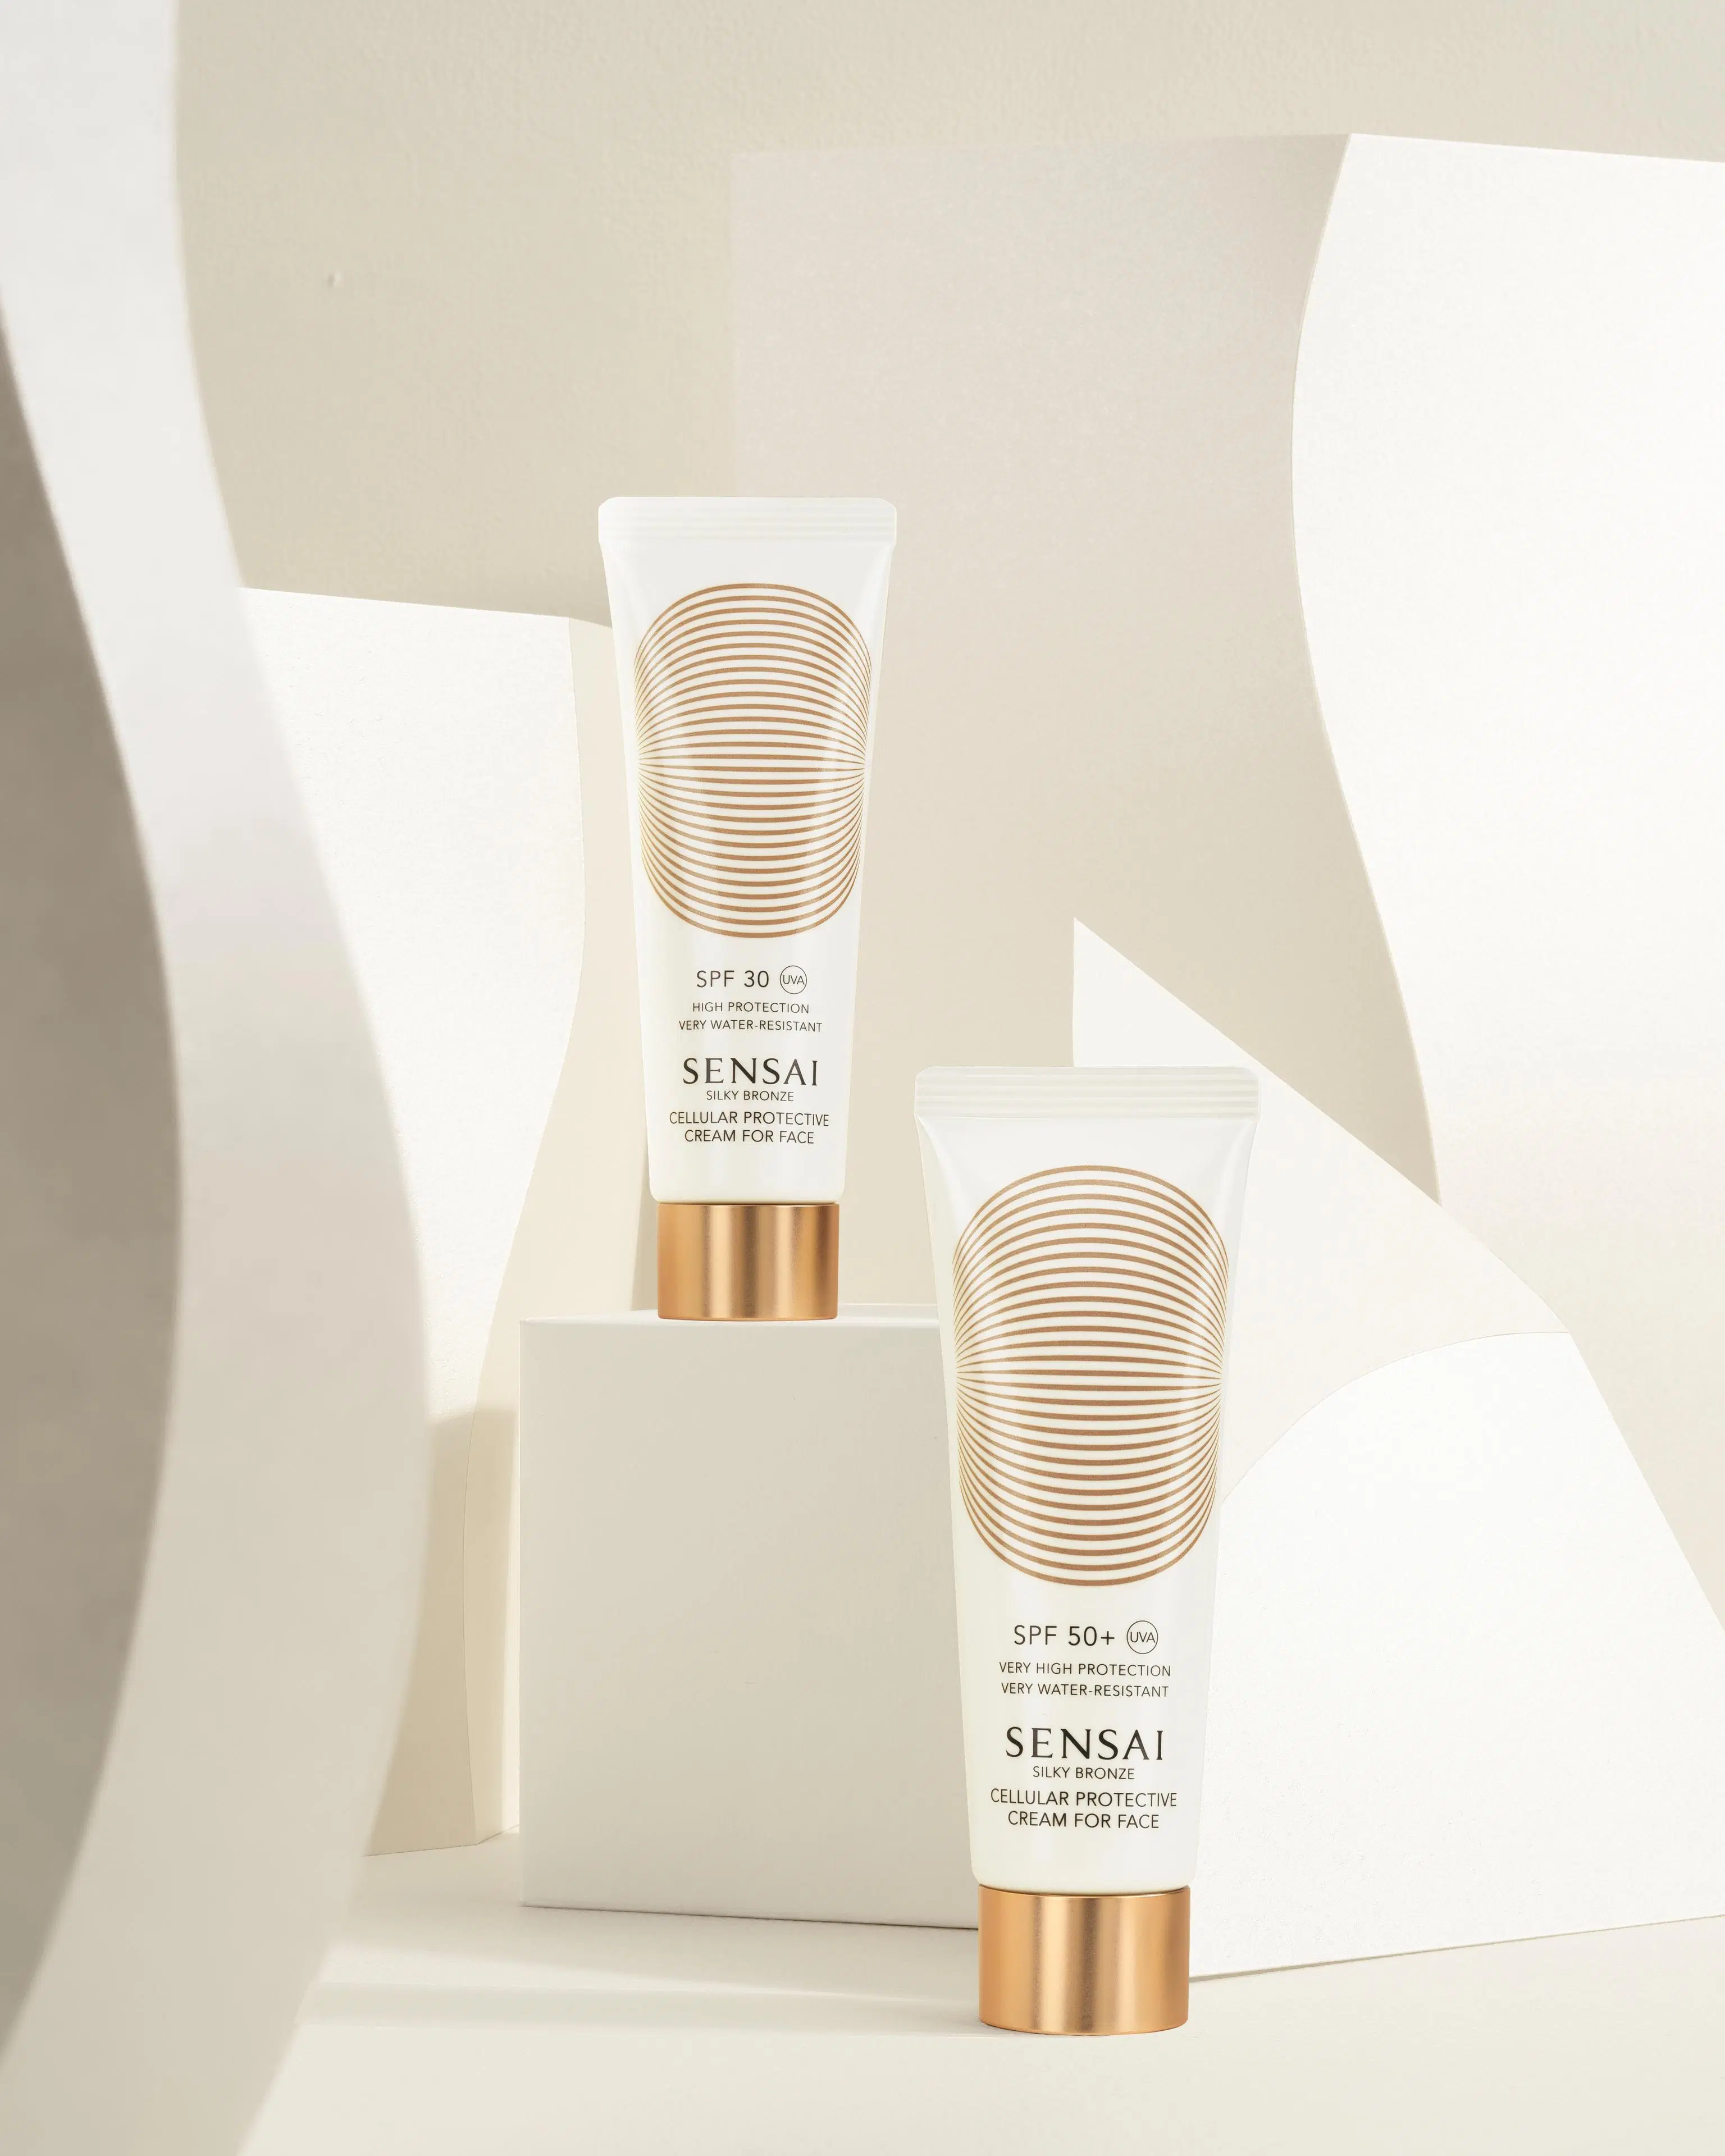 Sensai Silky Bronze Cellular Protective Cream for Face SPF 30 aurinkosuojavoide kasvoille 50 ml